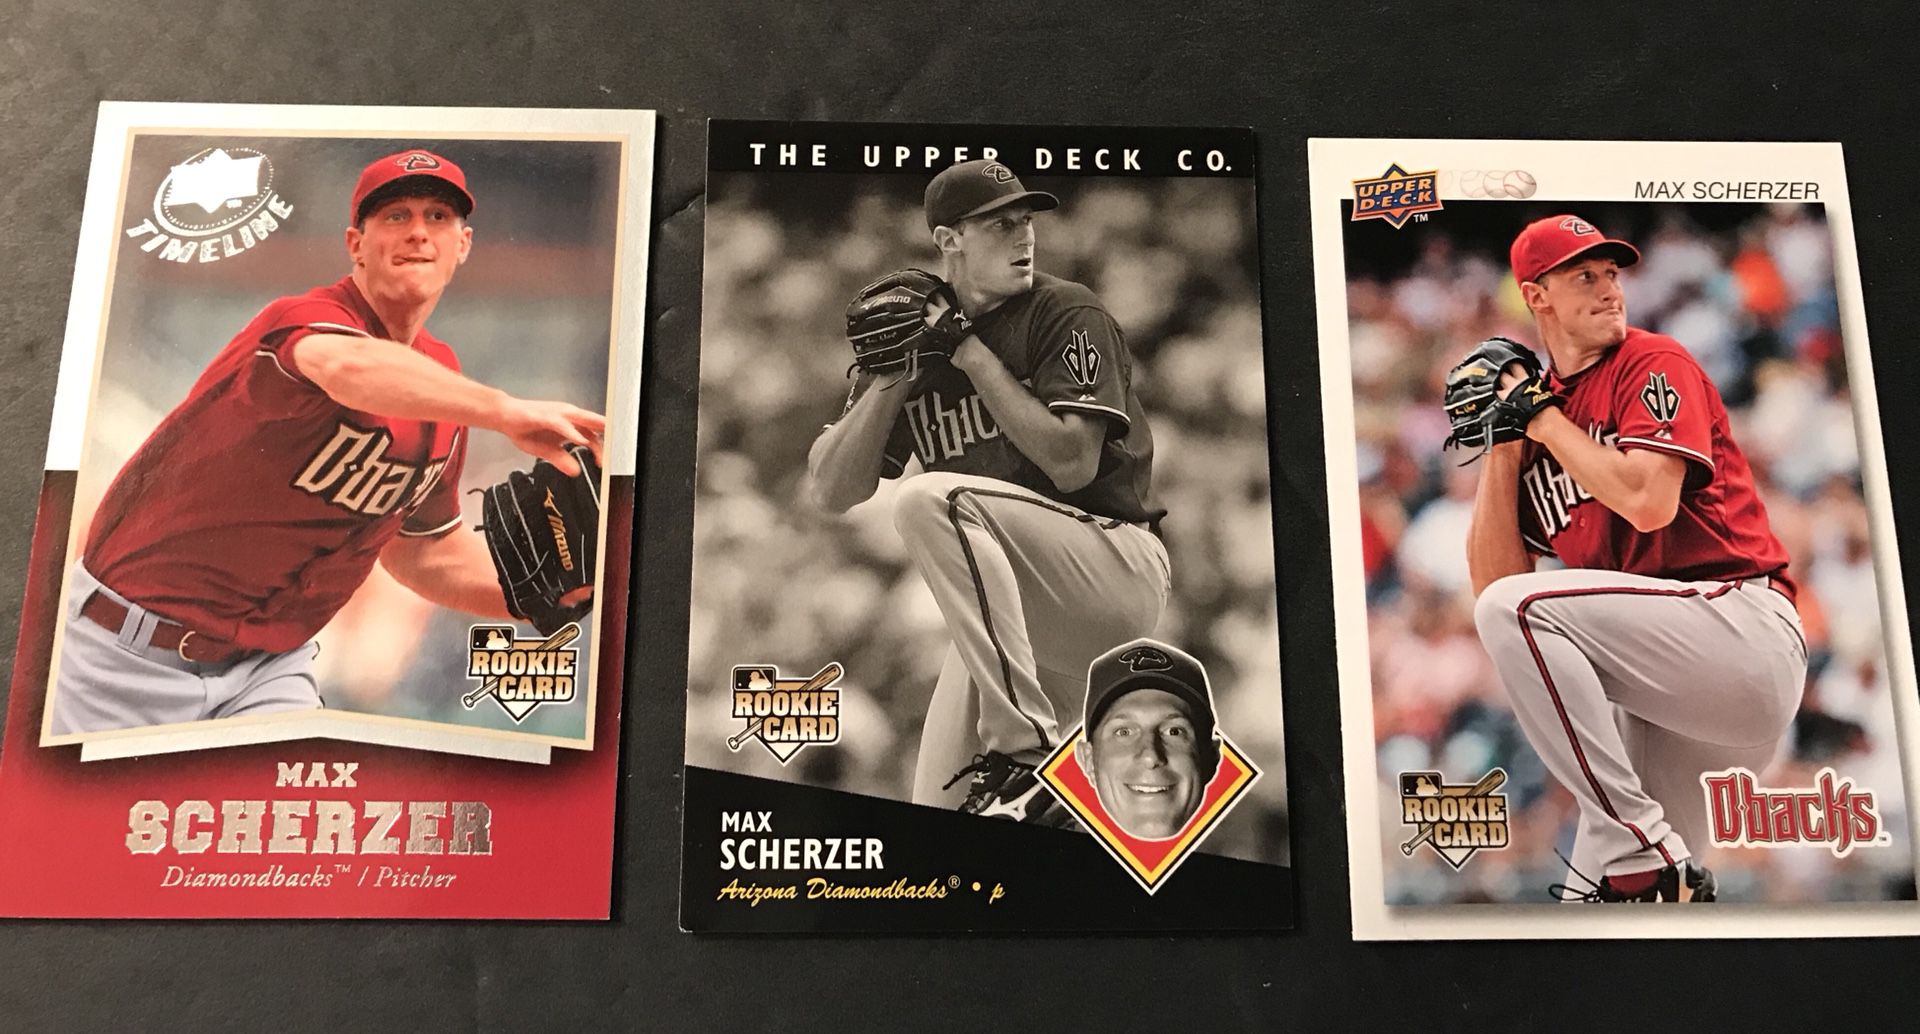 Max scherzer rookie baseball cards upper deck.